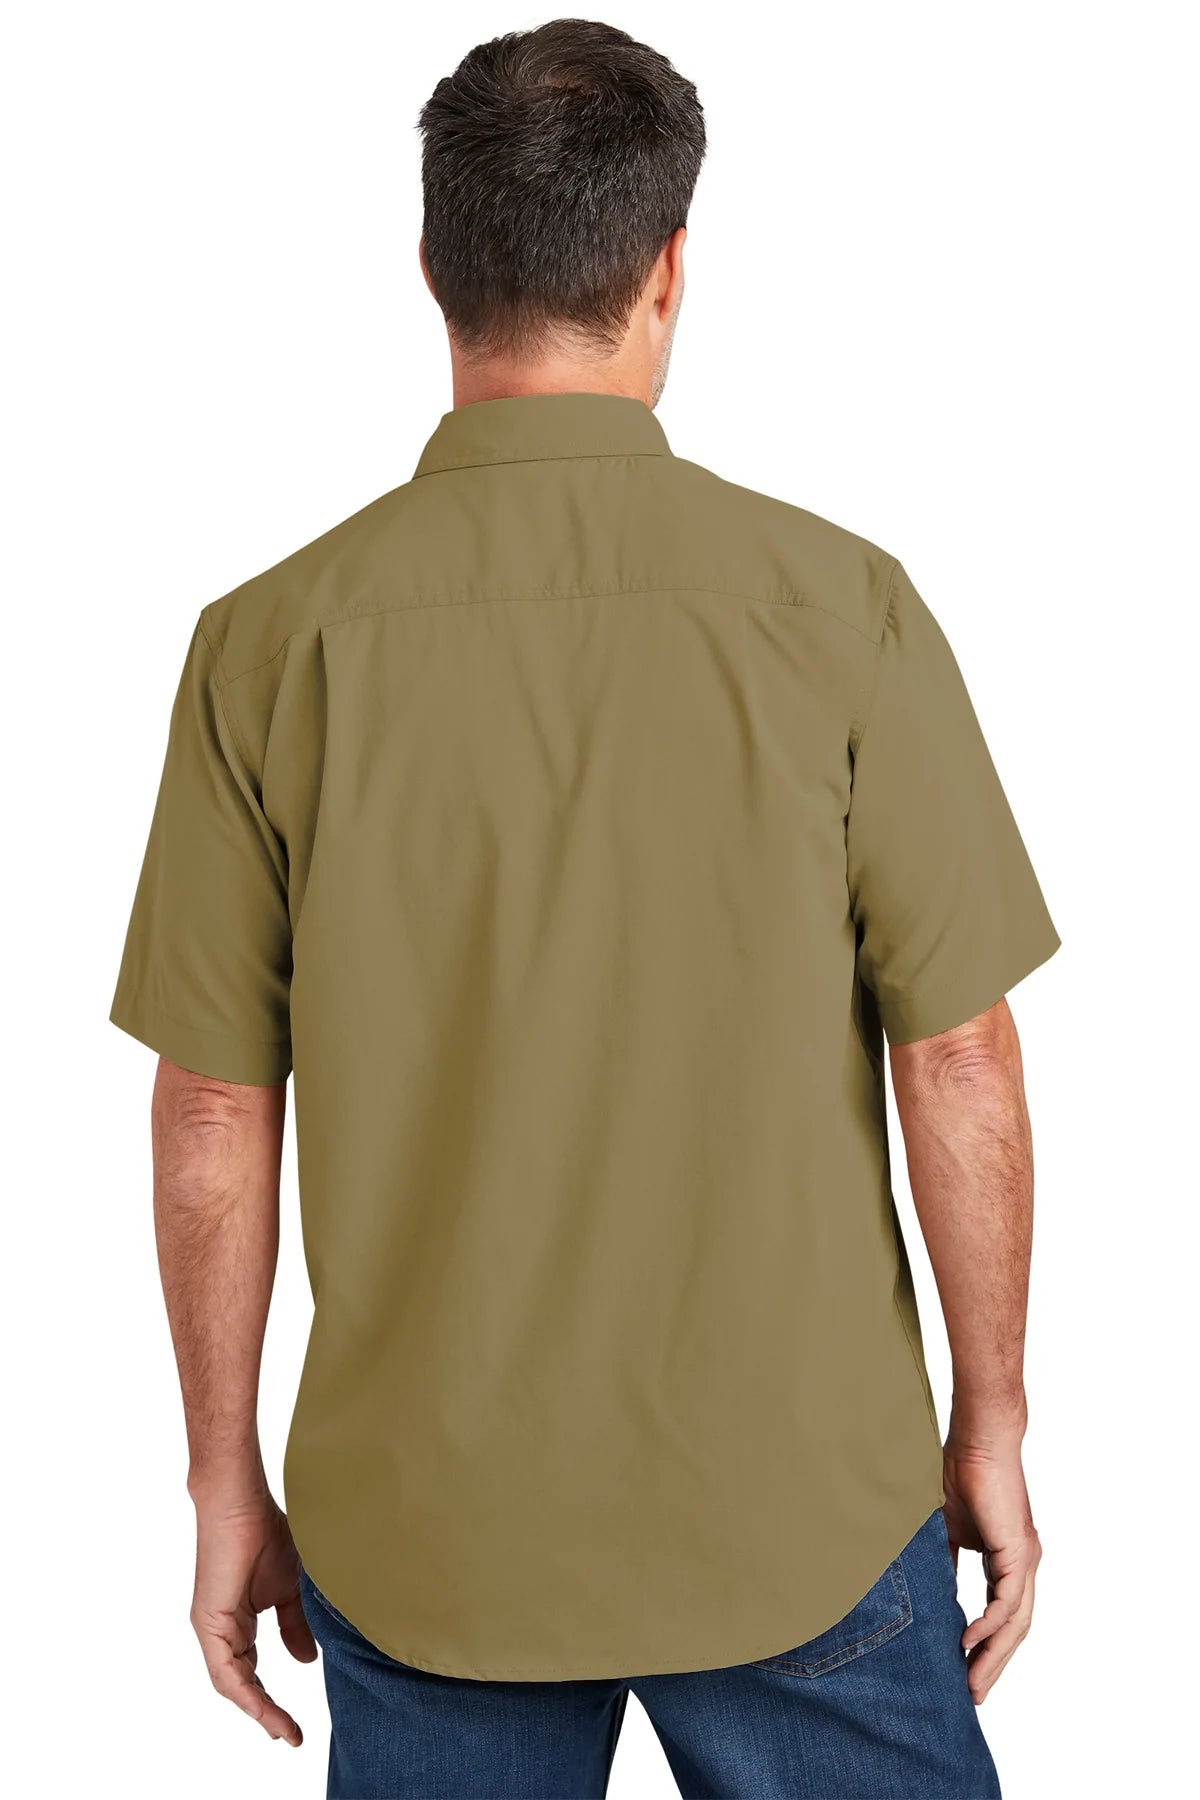 Carhartt Force Solid Custom Shirts, Dark Khaki